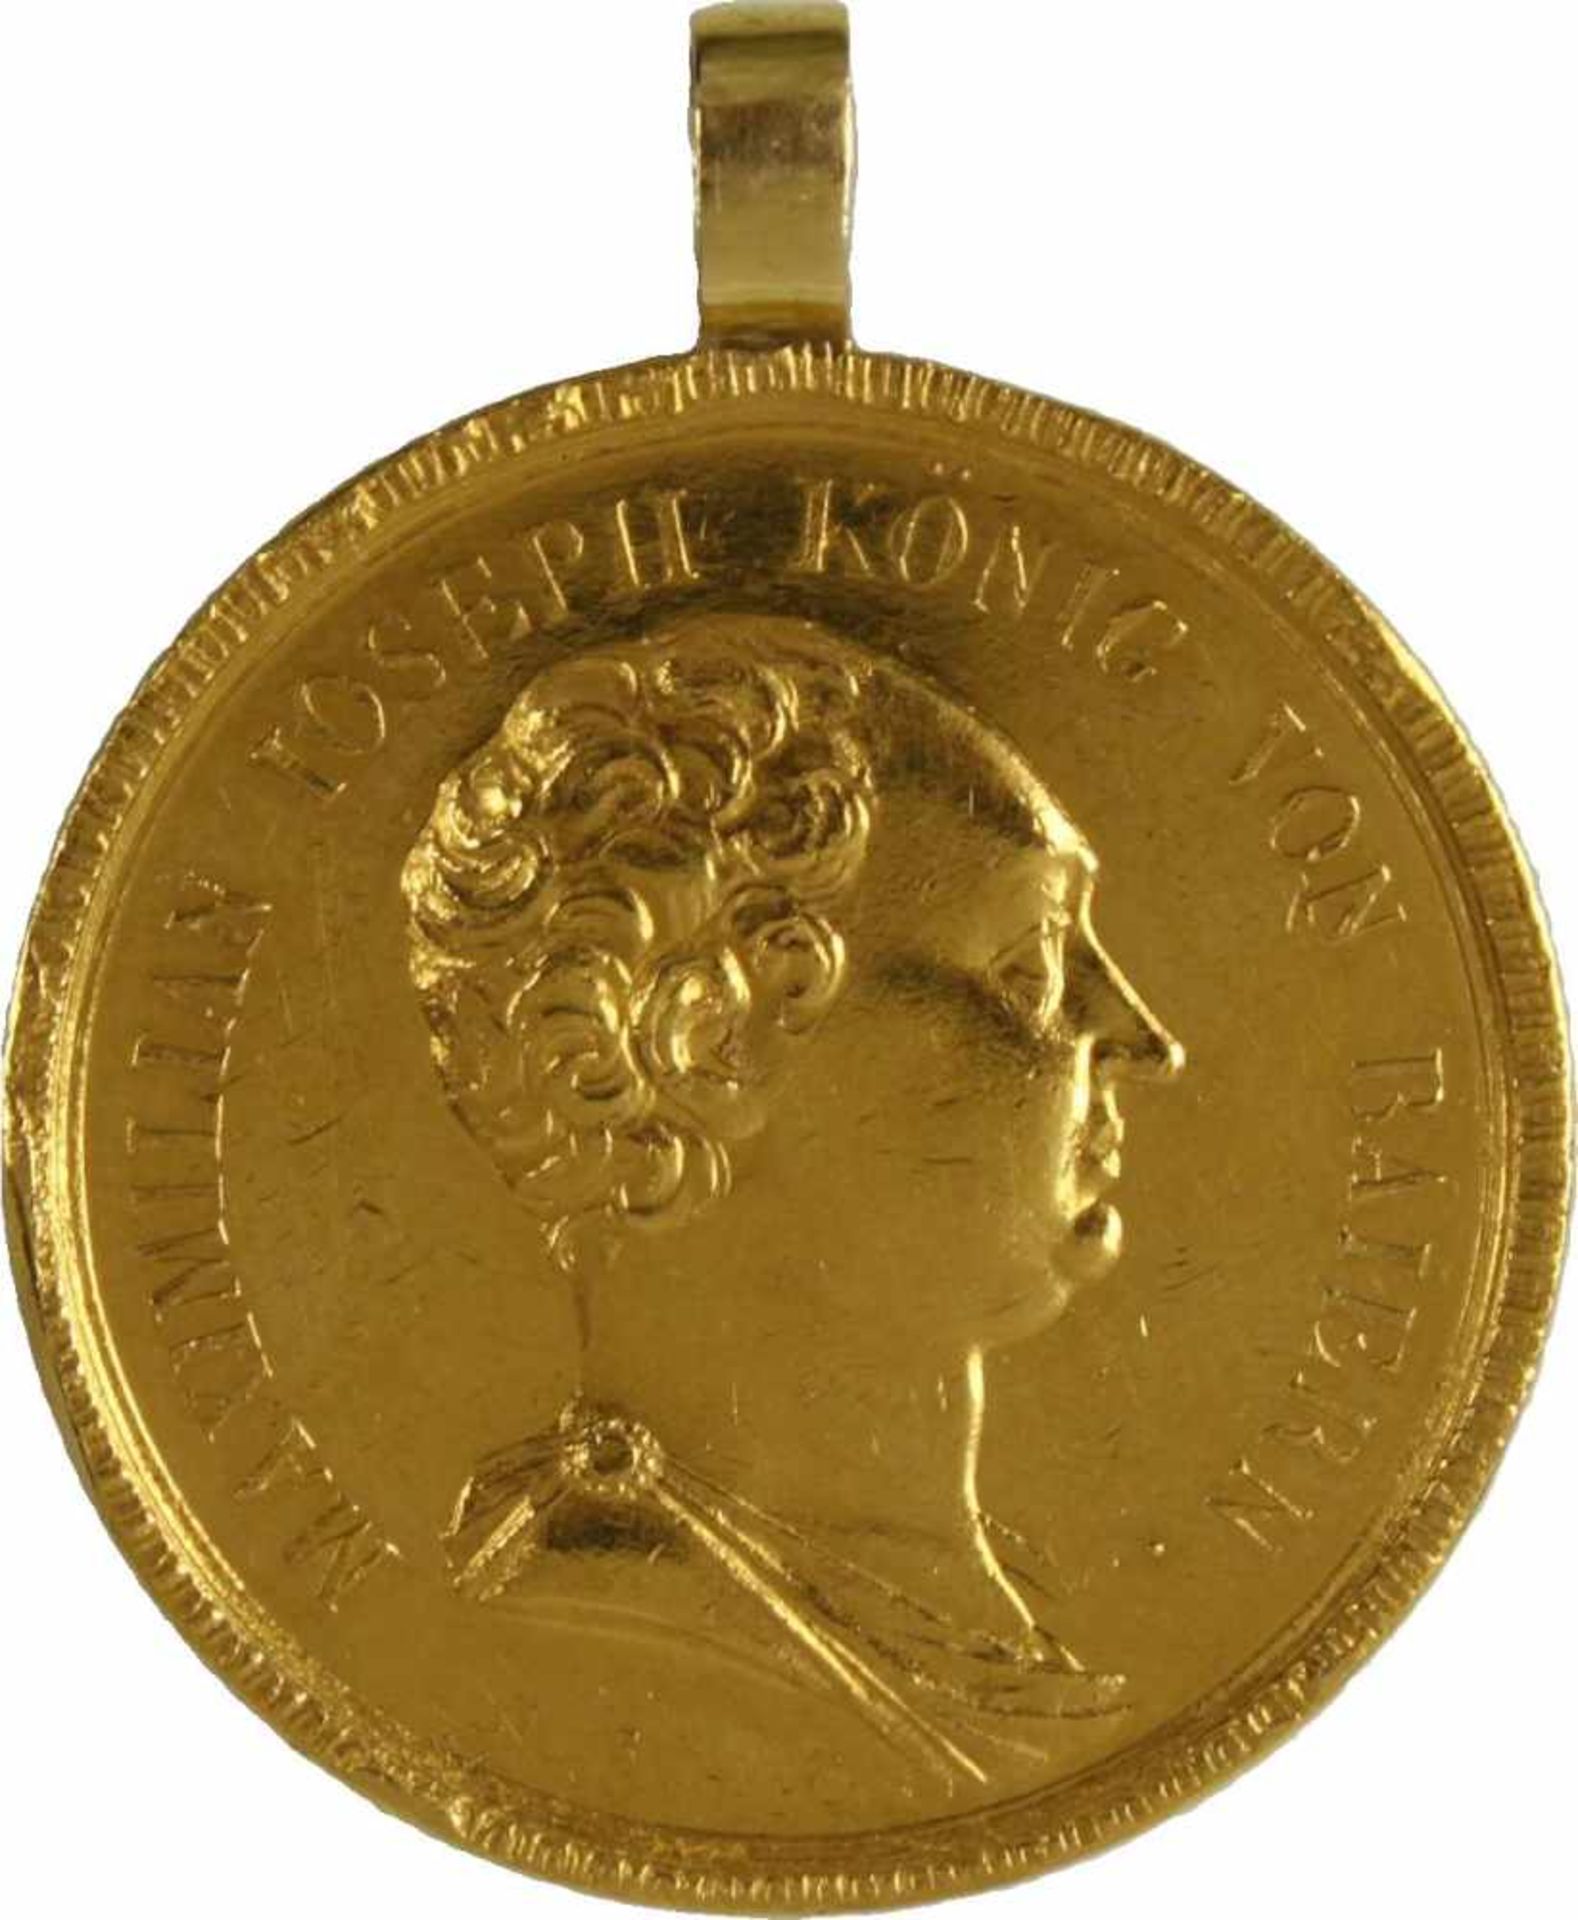 Goldene Zivilverdienstmedaille, Brustbild König Max Joseph I., verliehen 1806-1840. Medaille Gold,